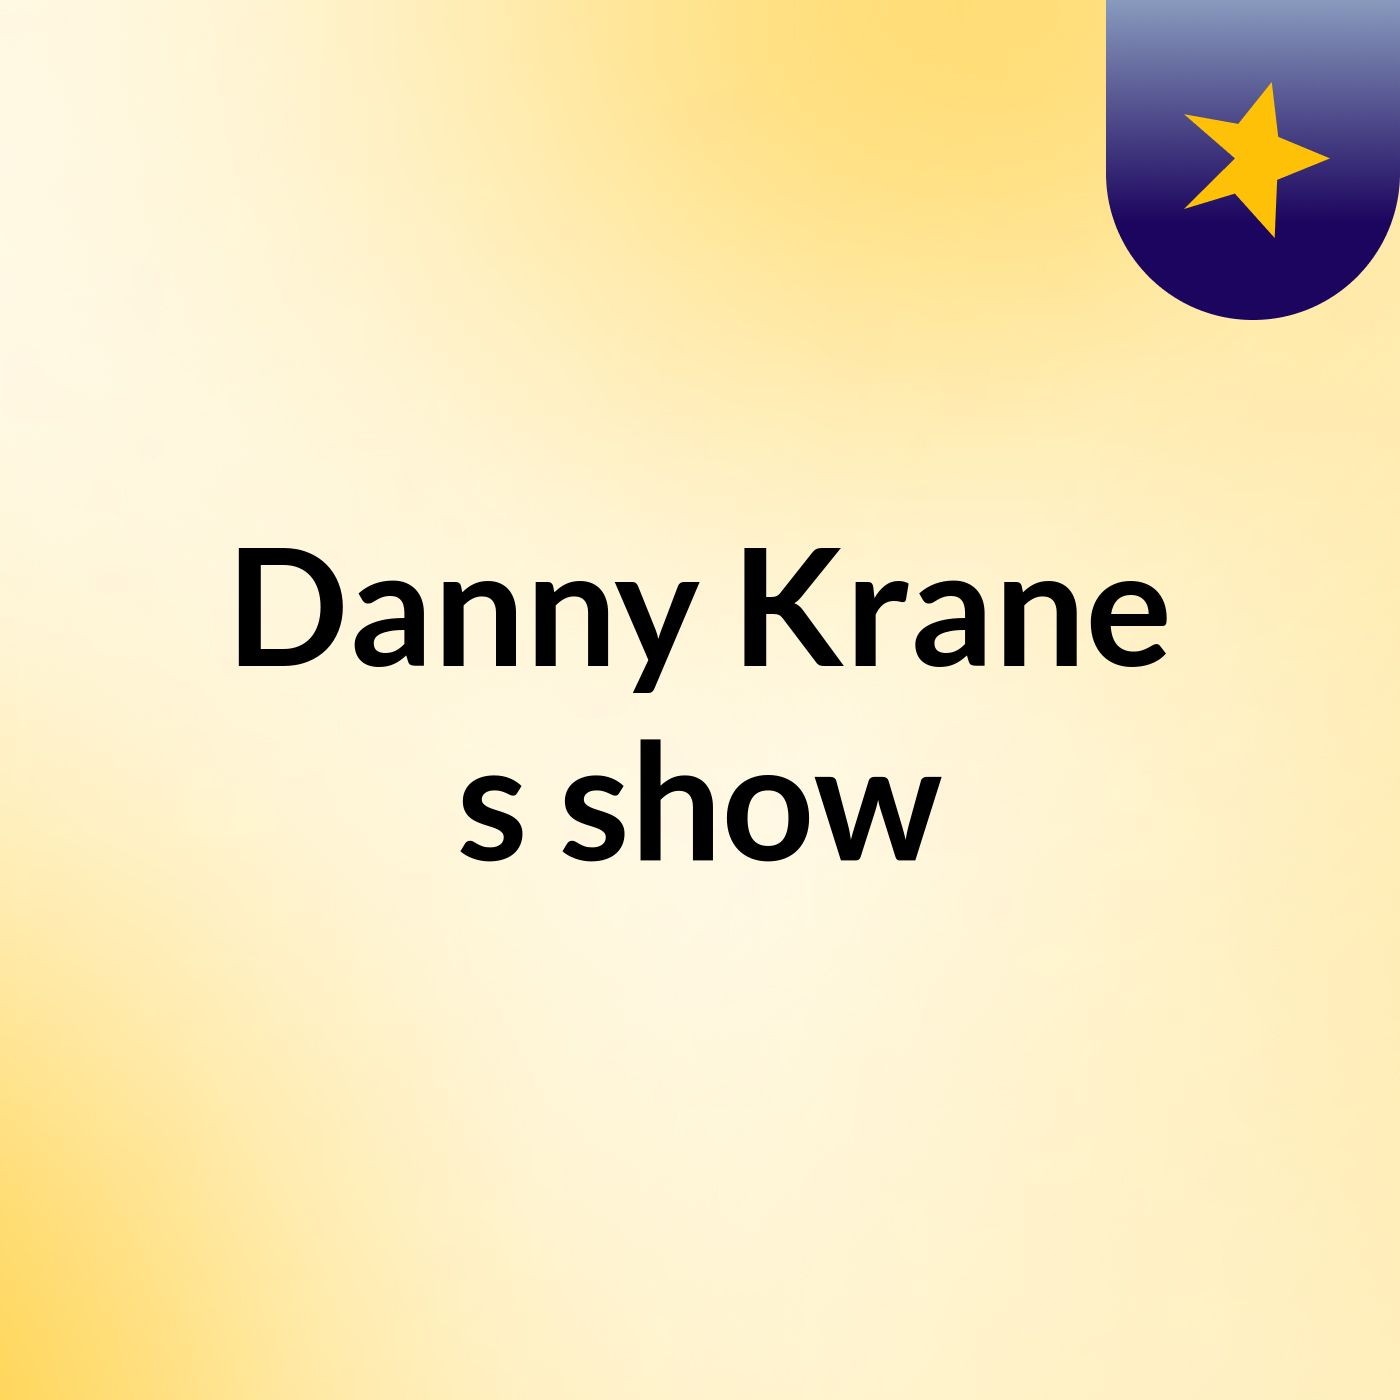 Danny Krane's show